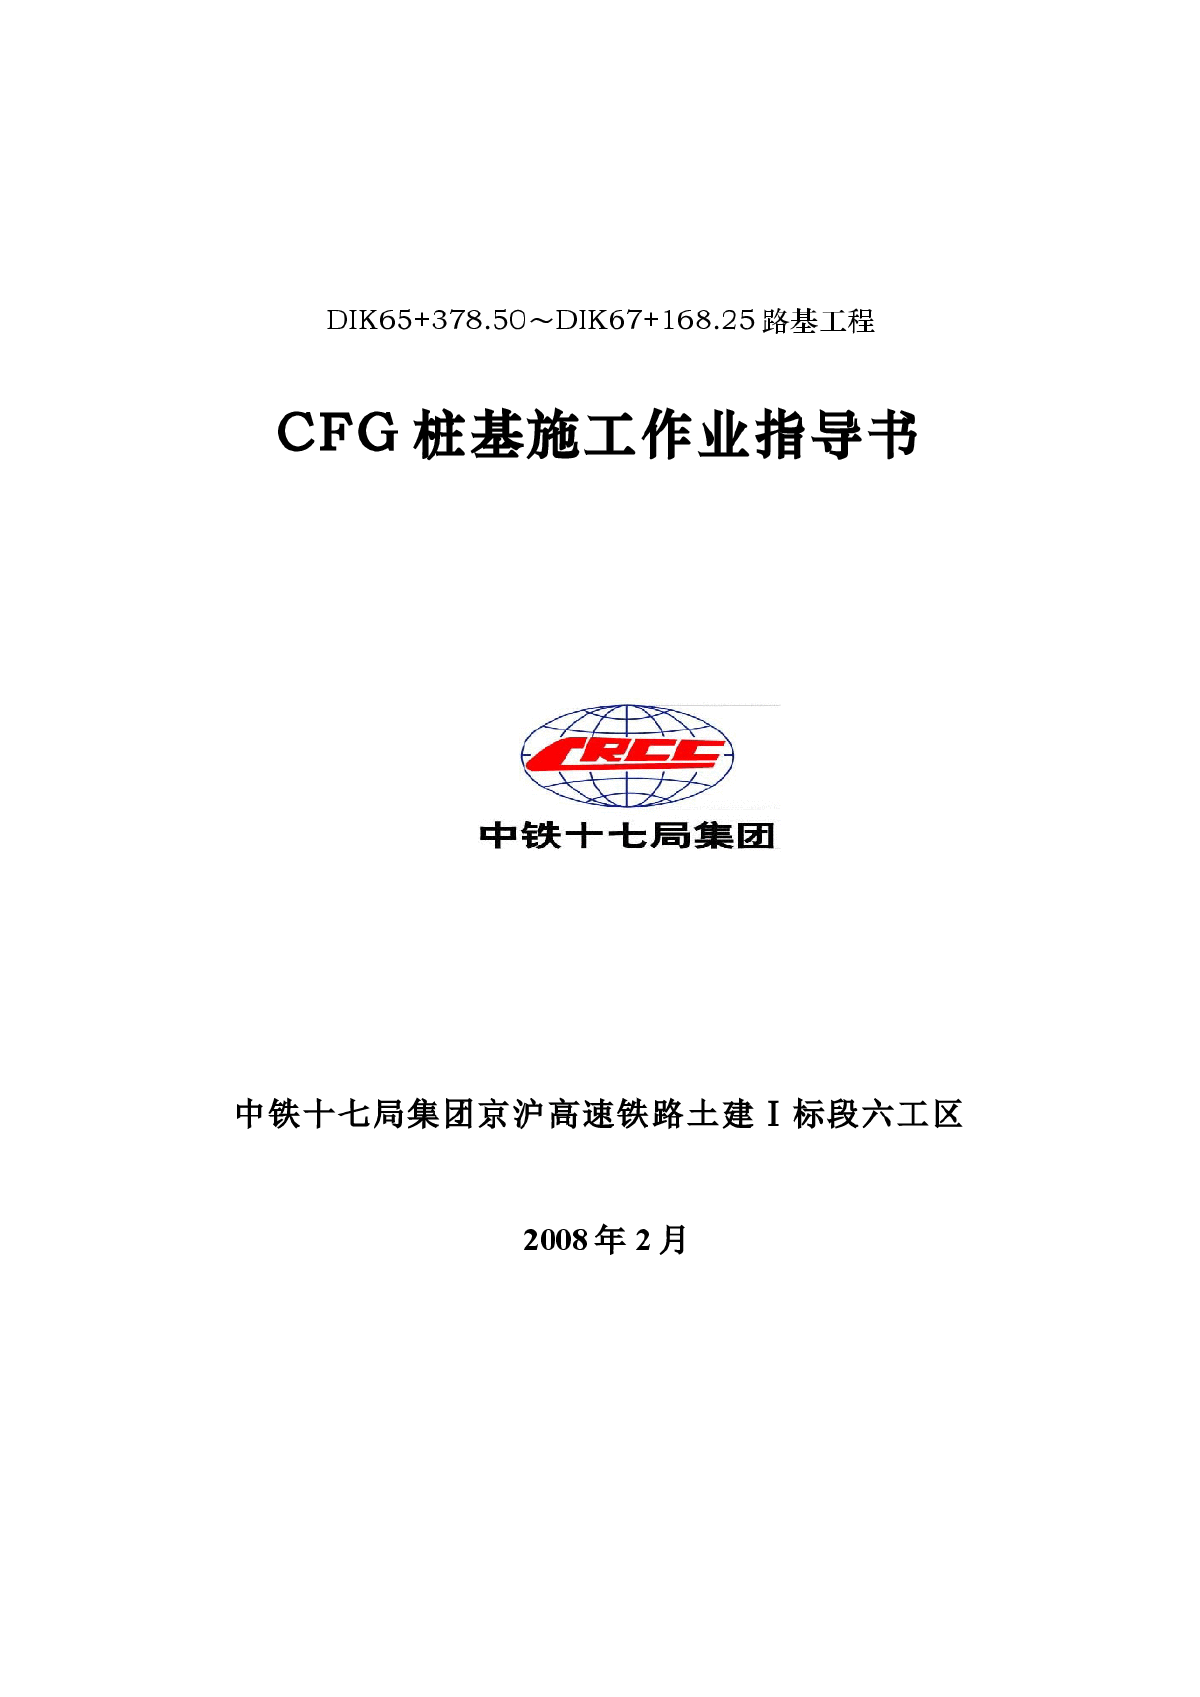 CFG桩基施工作业指导书-图一